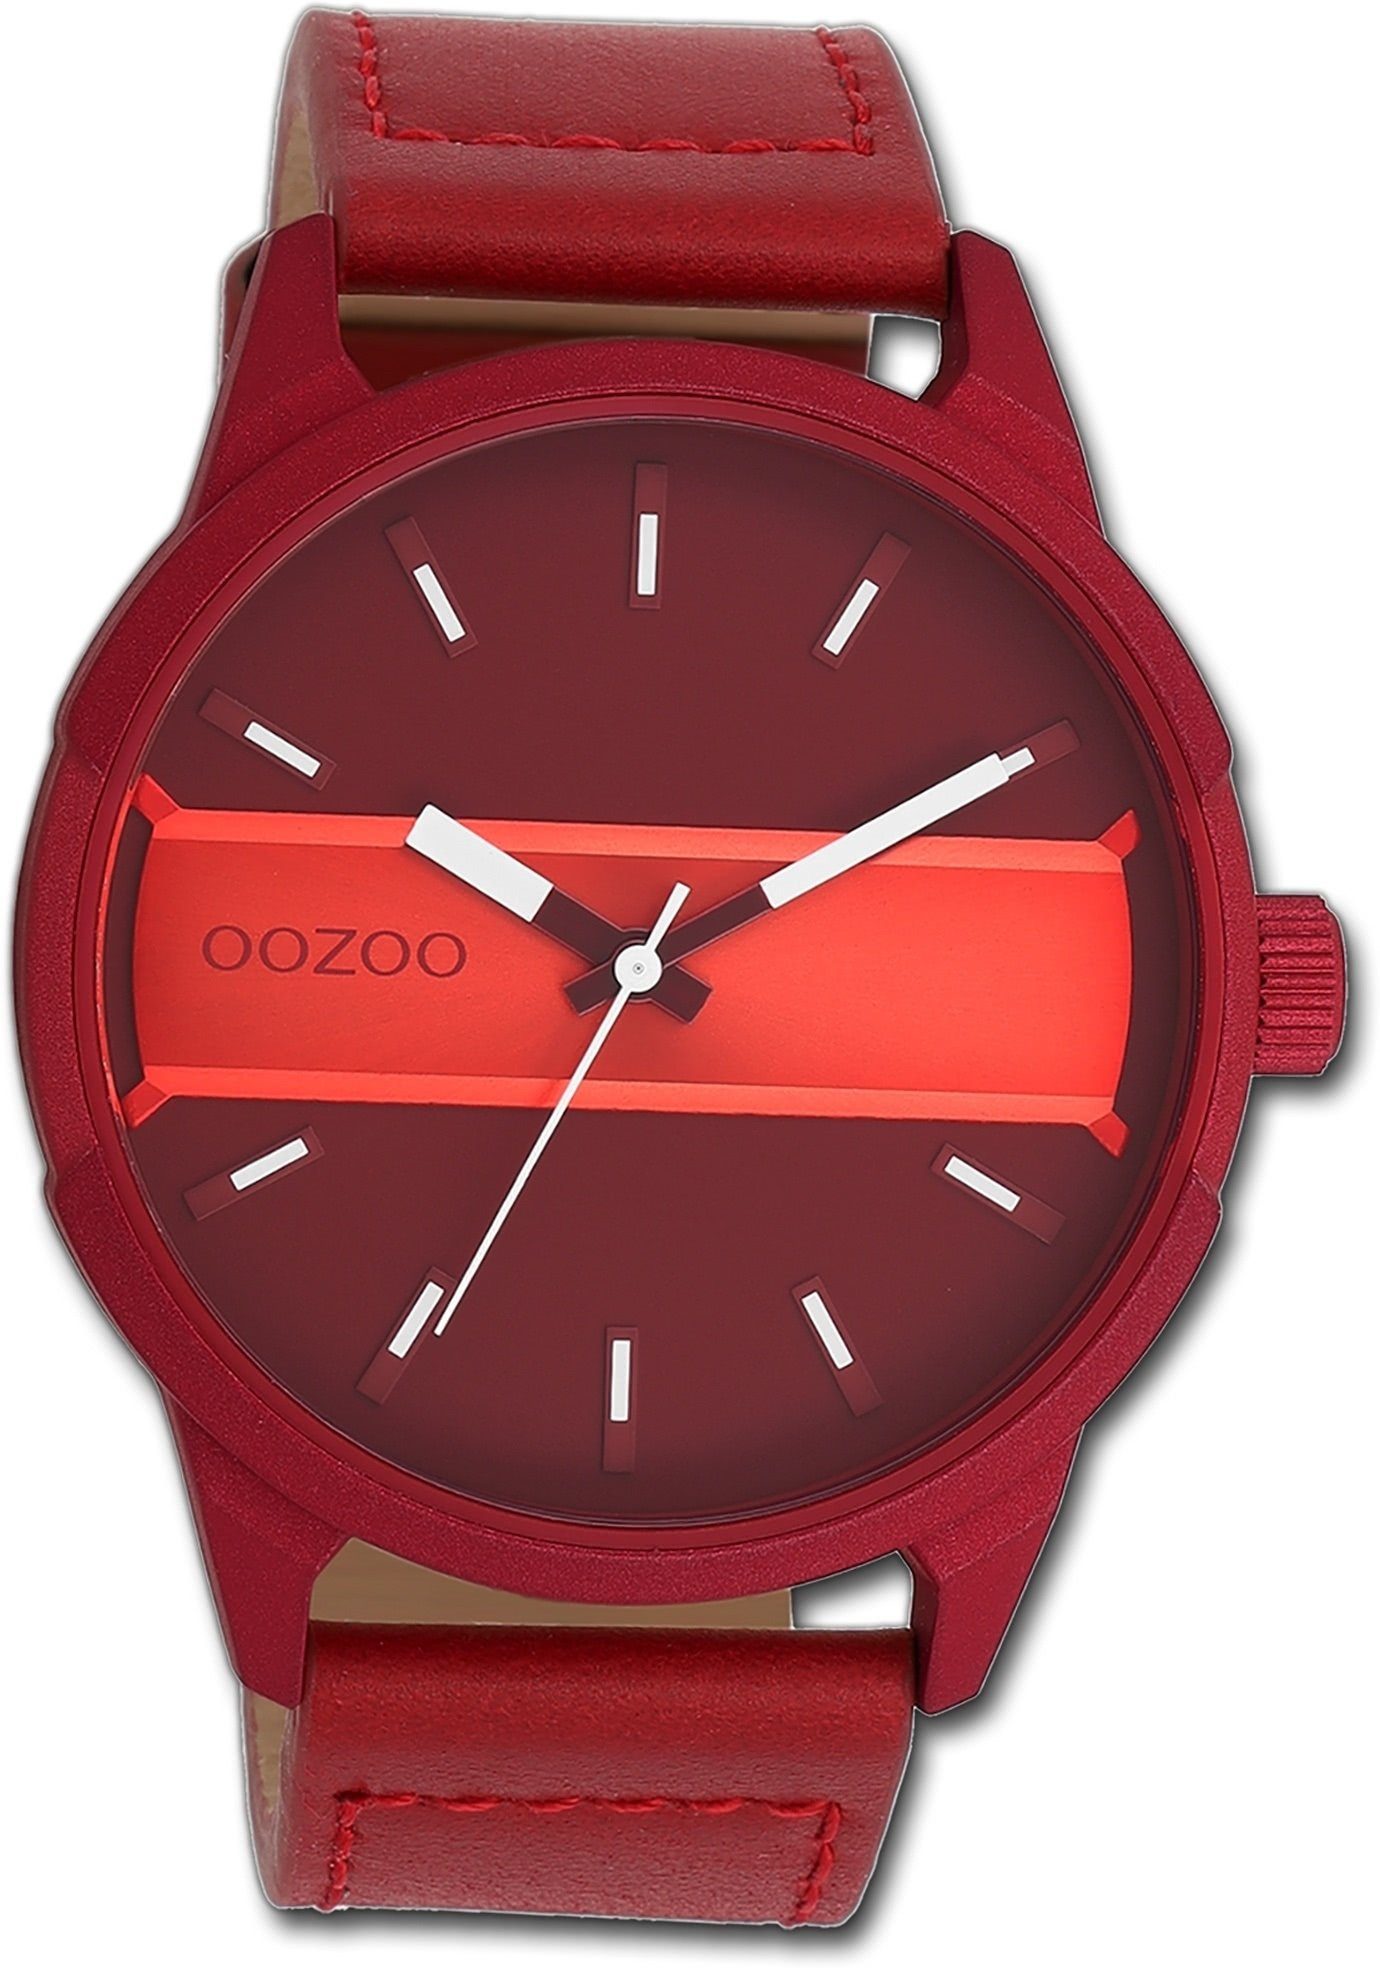 Herrenuhr (ca. Oozoo Lederarmband extra Armbanduhr Gehäuse, rot, Timepieces, Herren OOZOO groß rundes Quarzuhr 48mm)